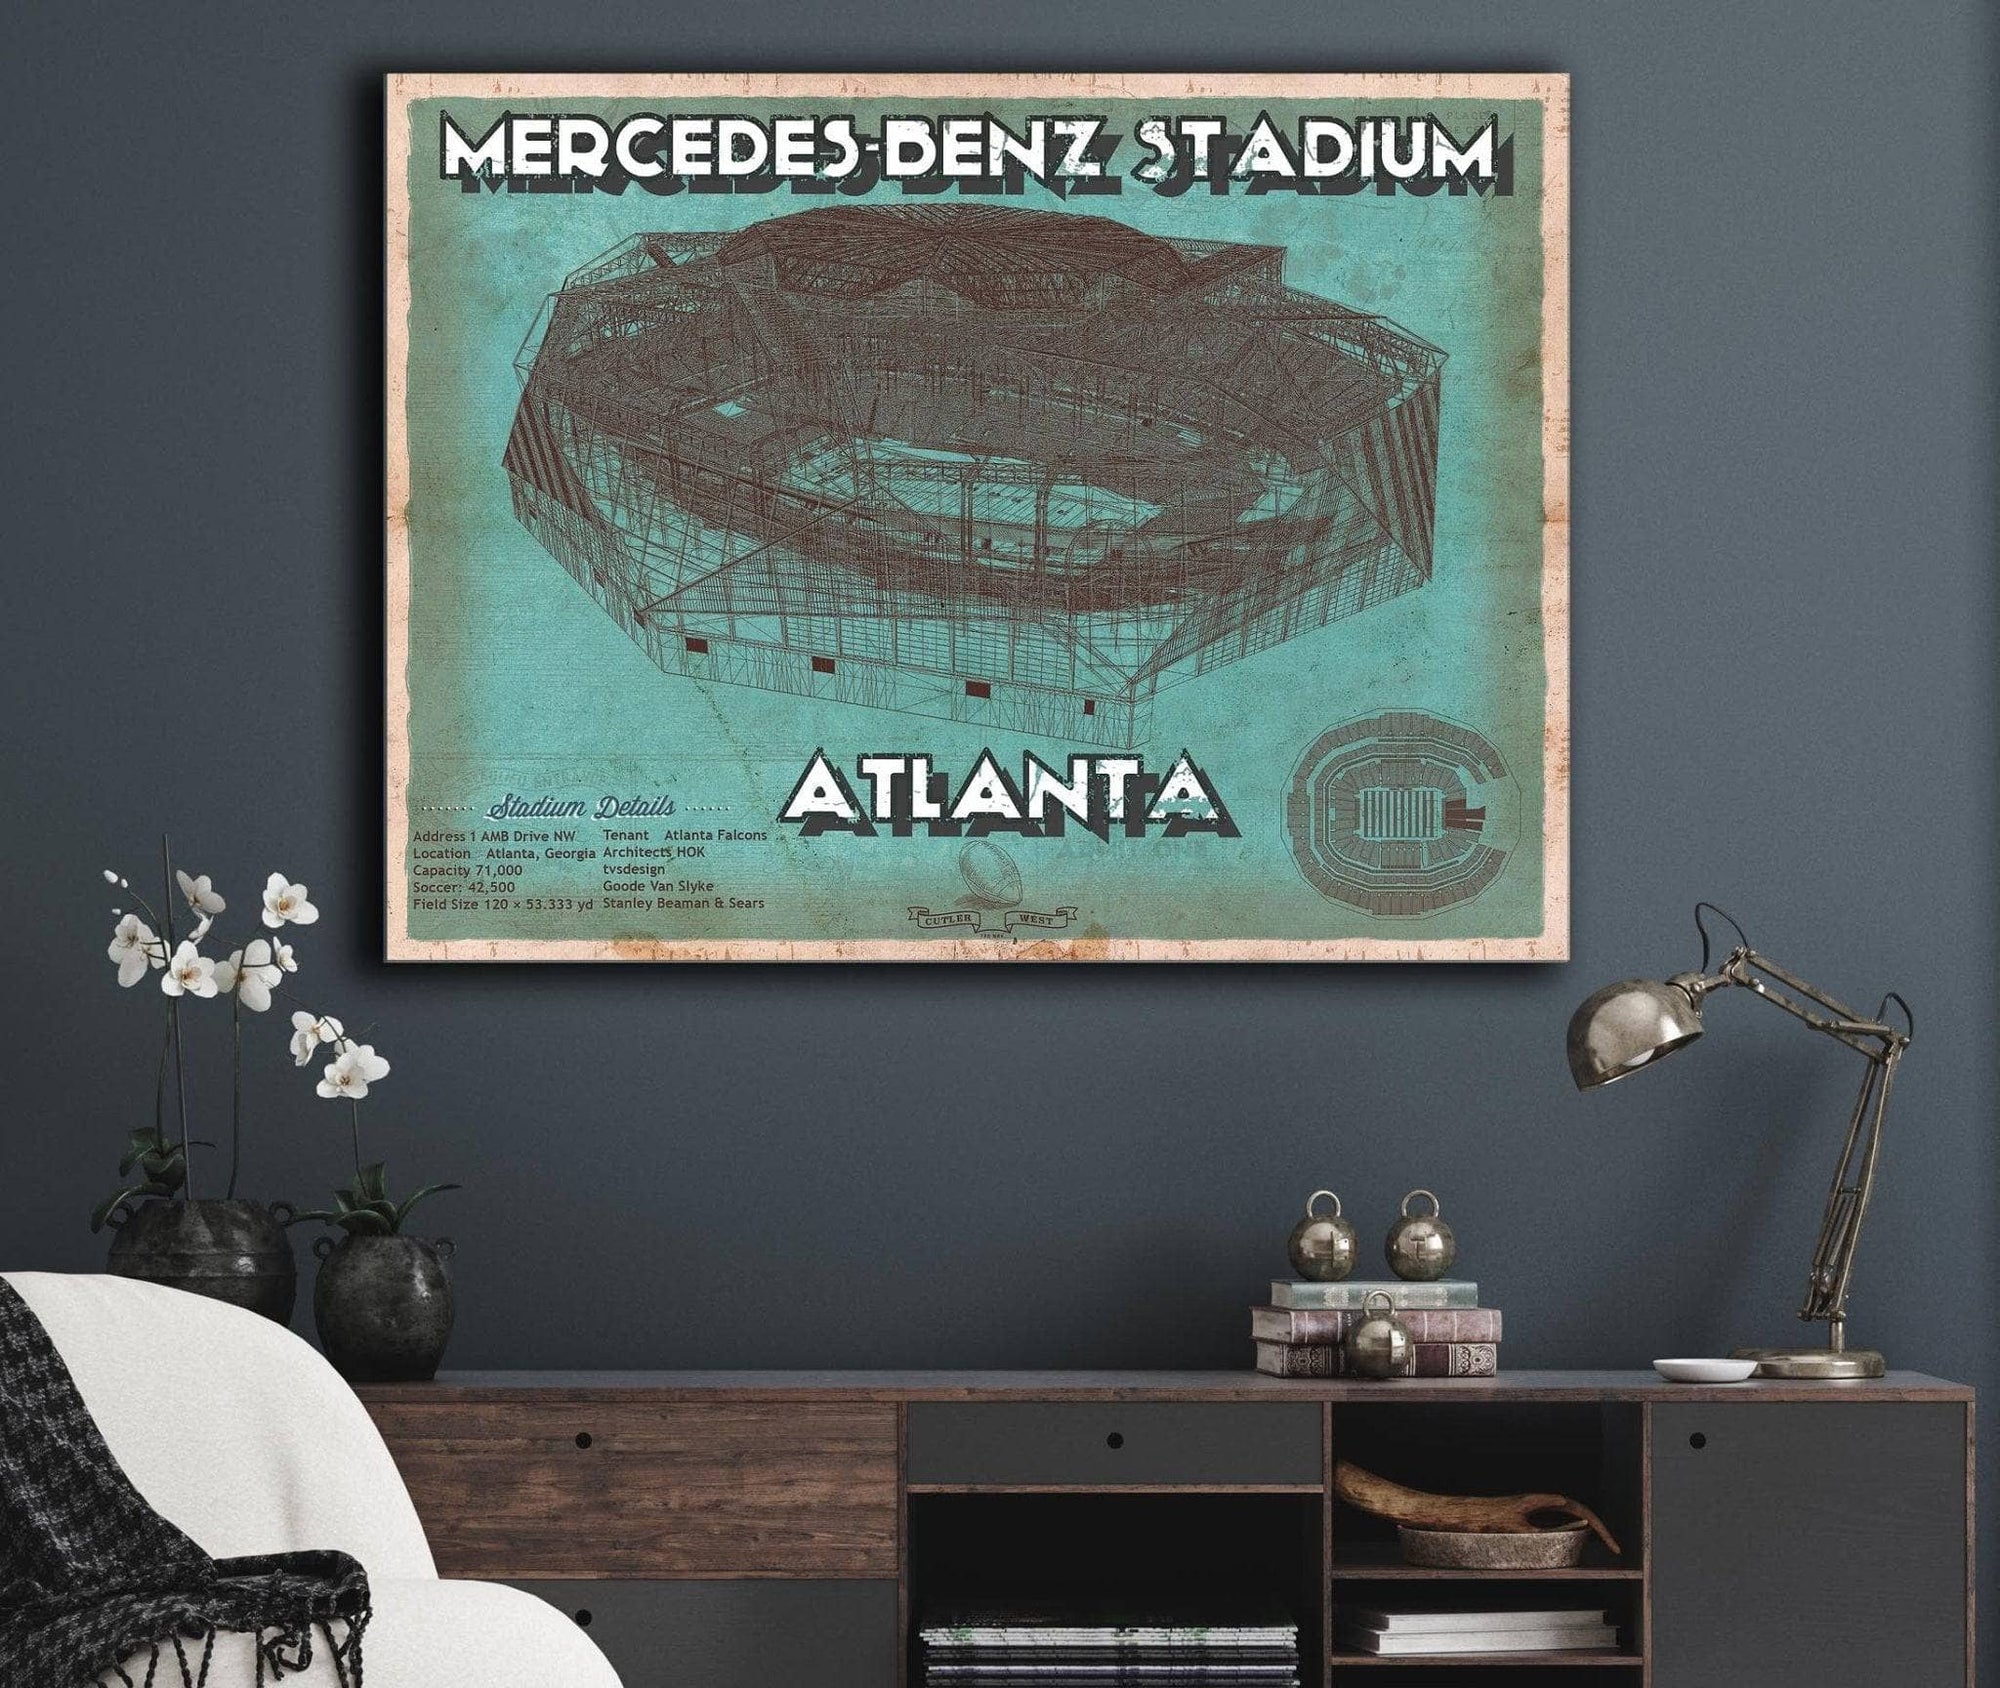 Cutler West Pro Football Collection Vintage Atlanta Falcons - Mercedes-Benz Stadium Football Print